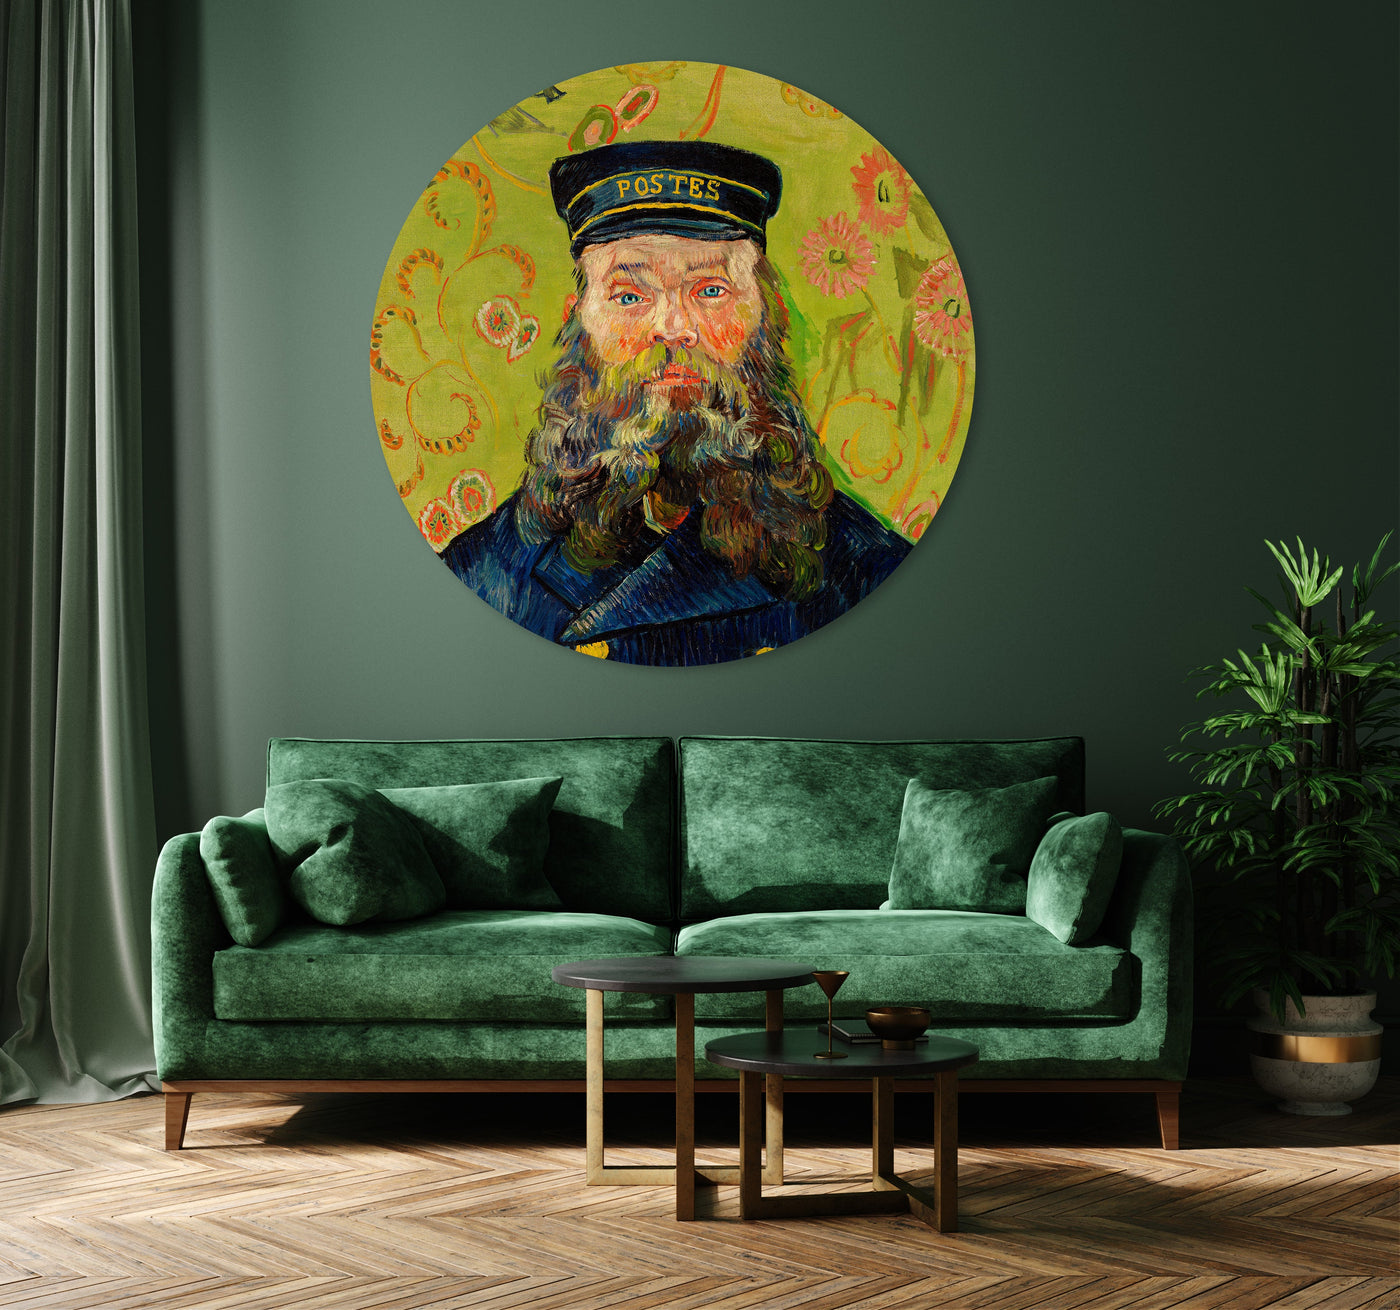 Vincent van Gogh - The Postman